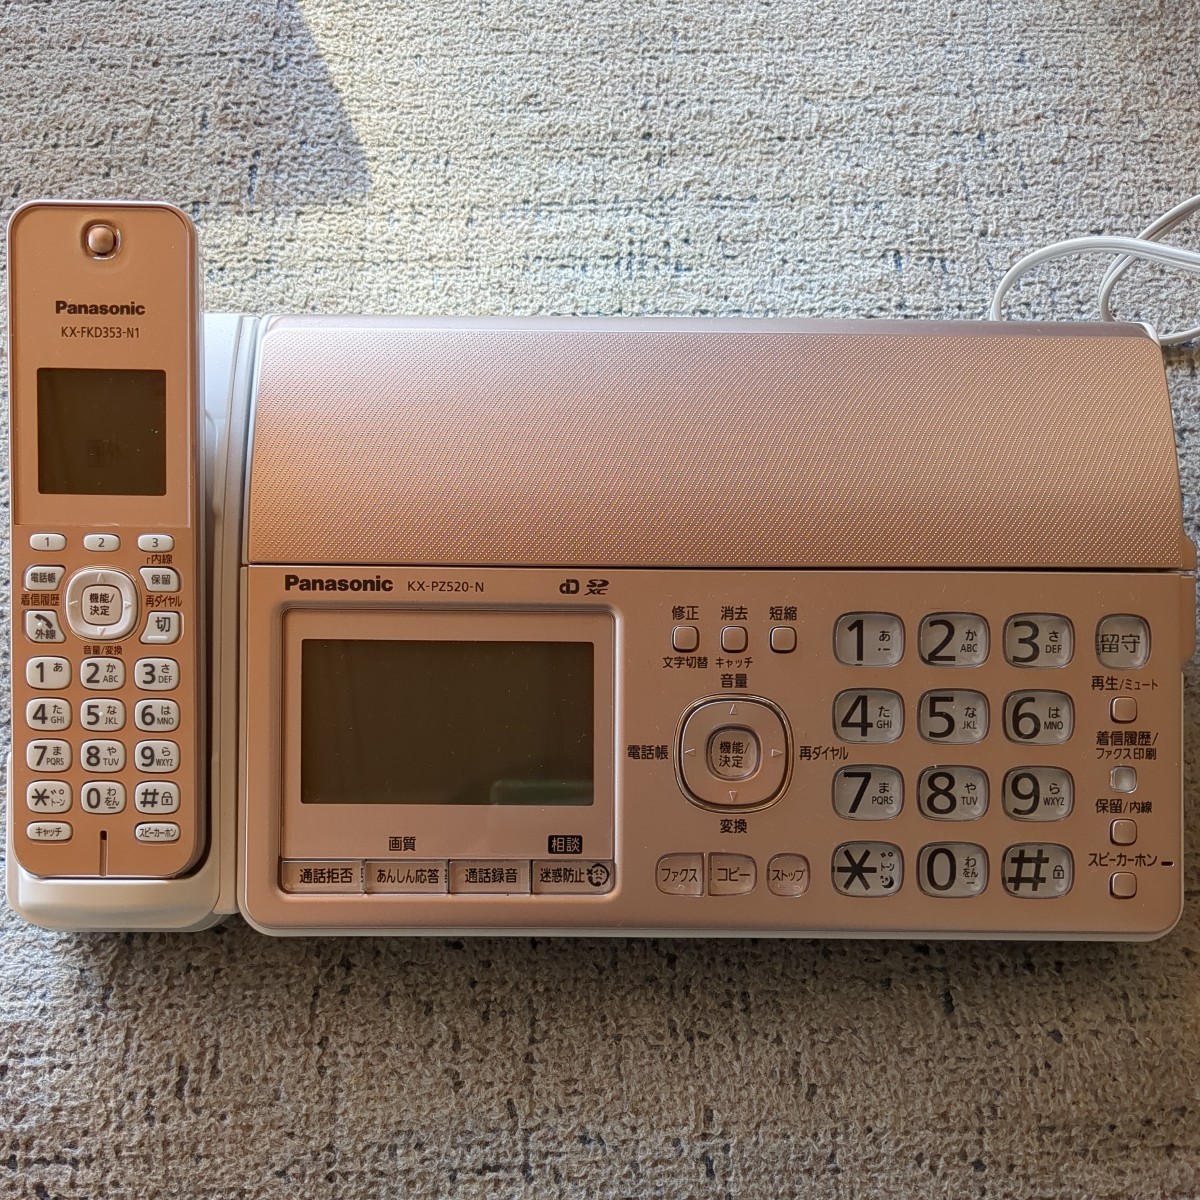  present condition goods Panasonic digital cordless FAX KX-PZ520-N cordless handset 1 pcs attaching PANASONIC..... pink gold telephone machine cordless handset FAX telephone 